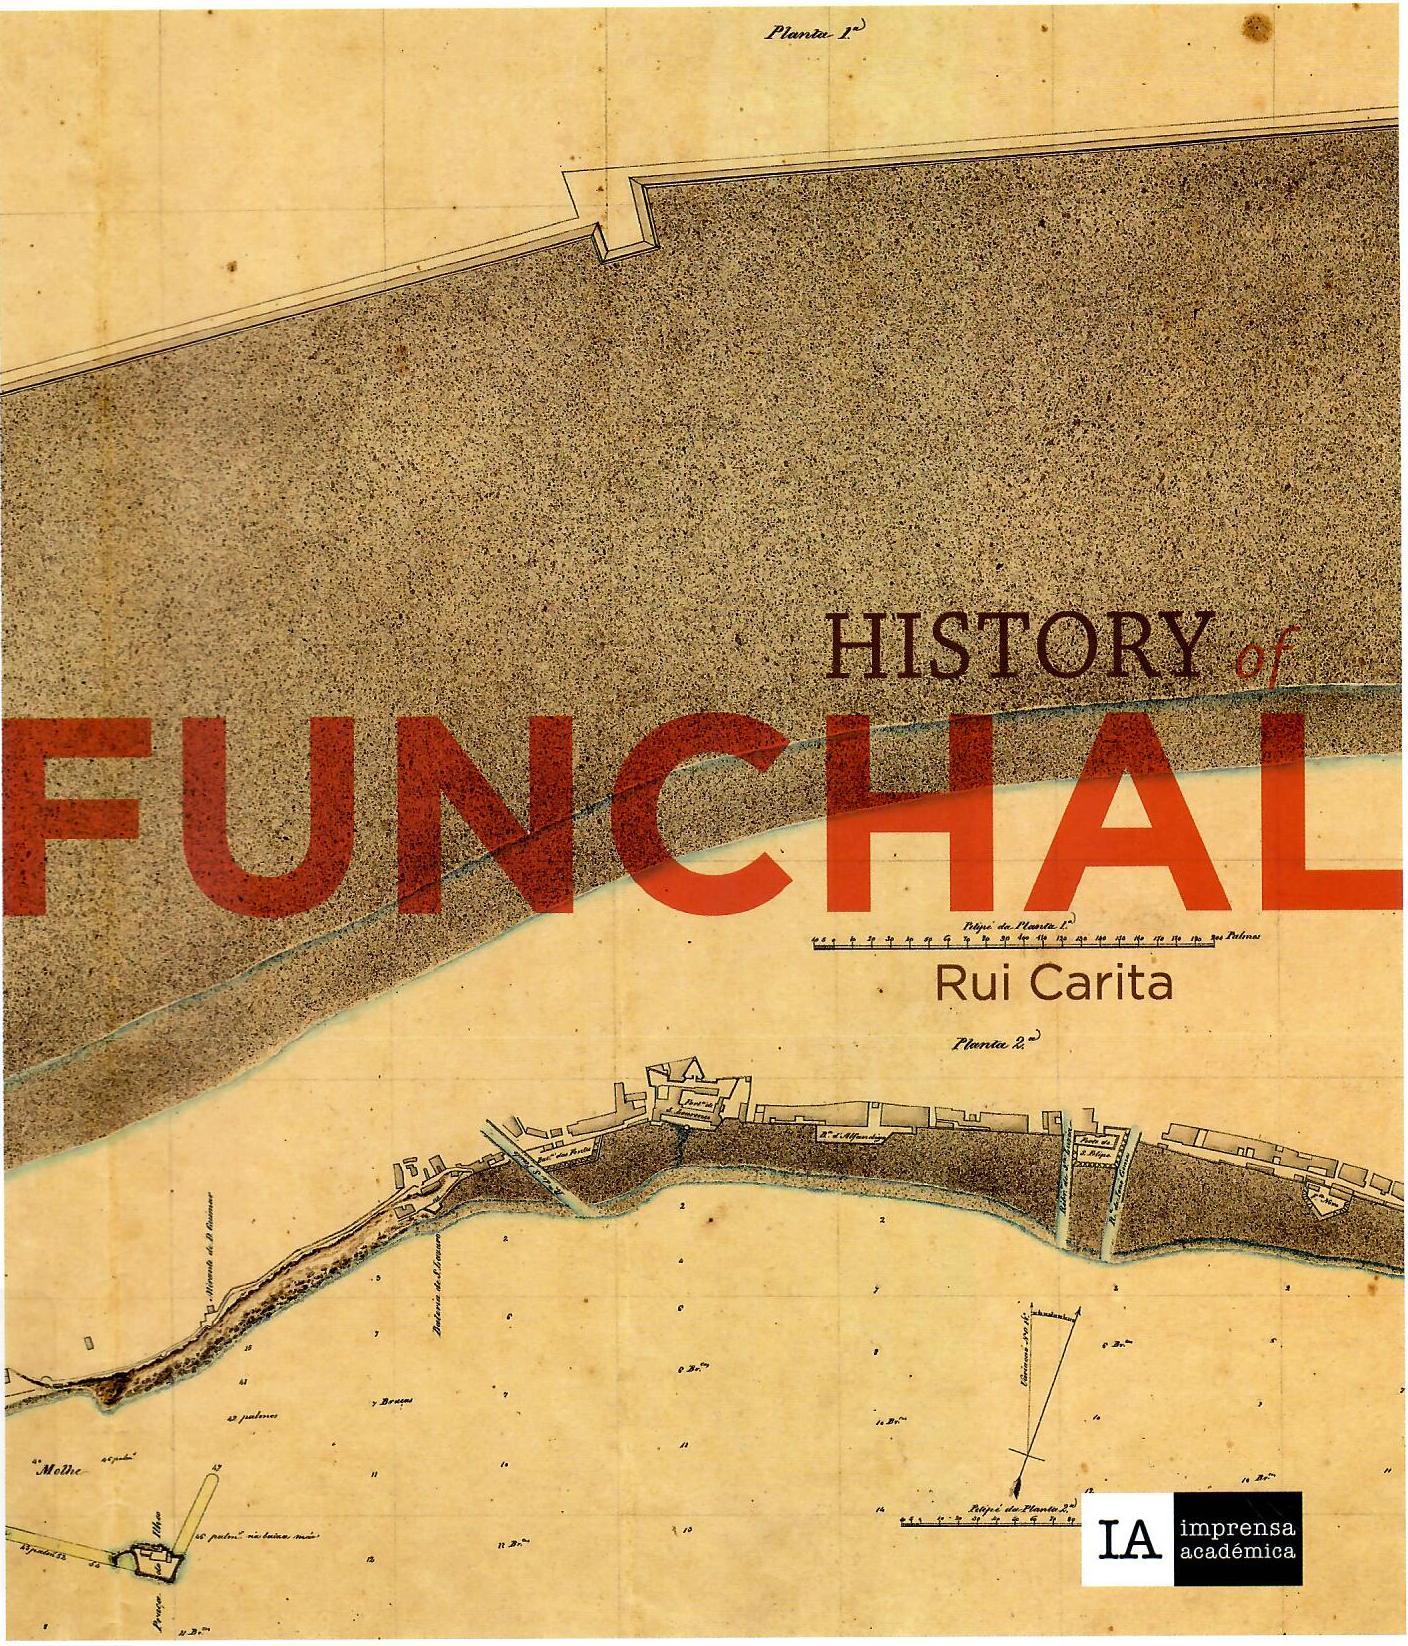 HISTORY OF FUNCAL